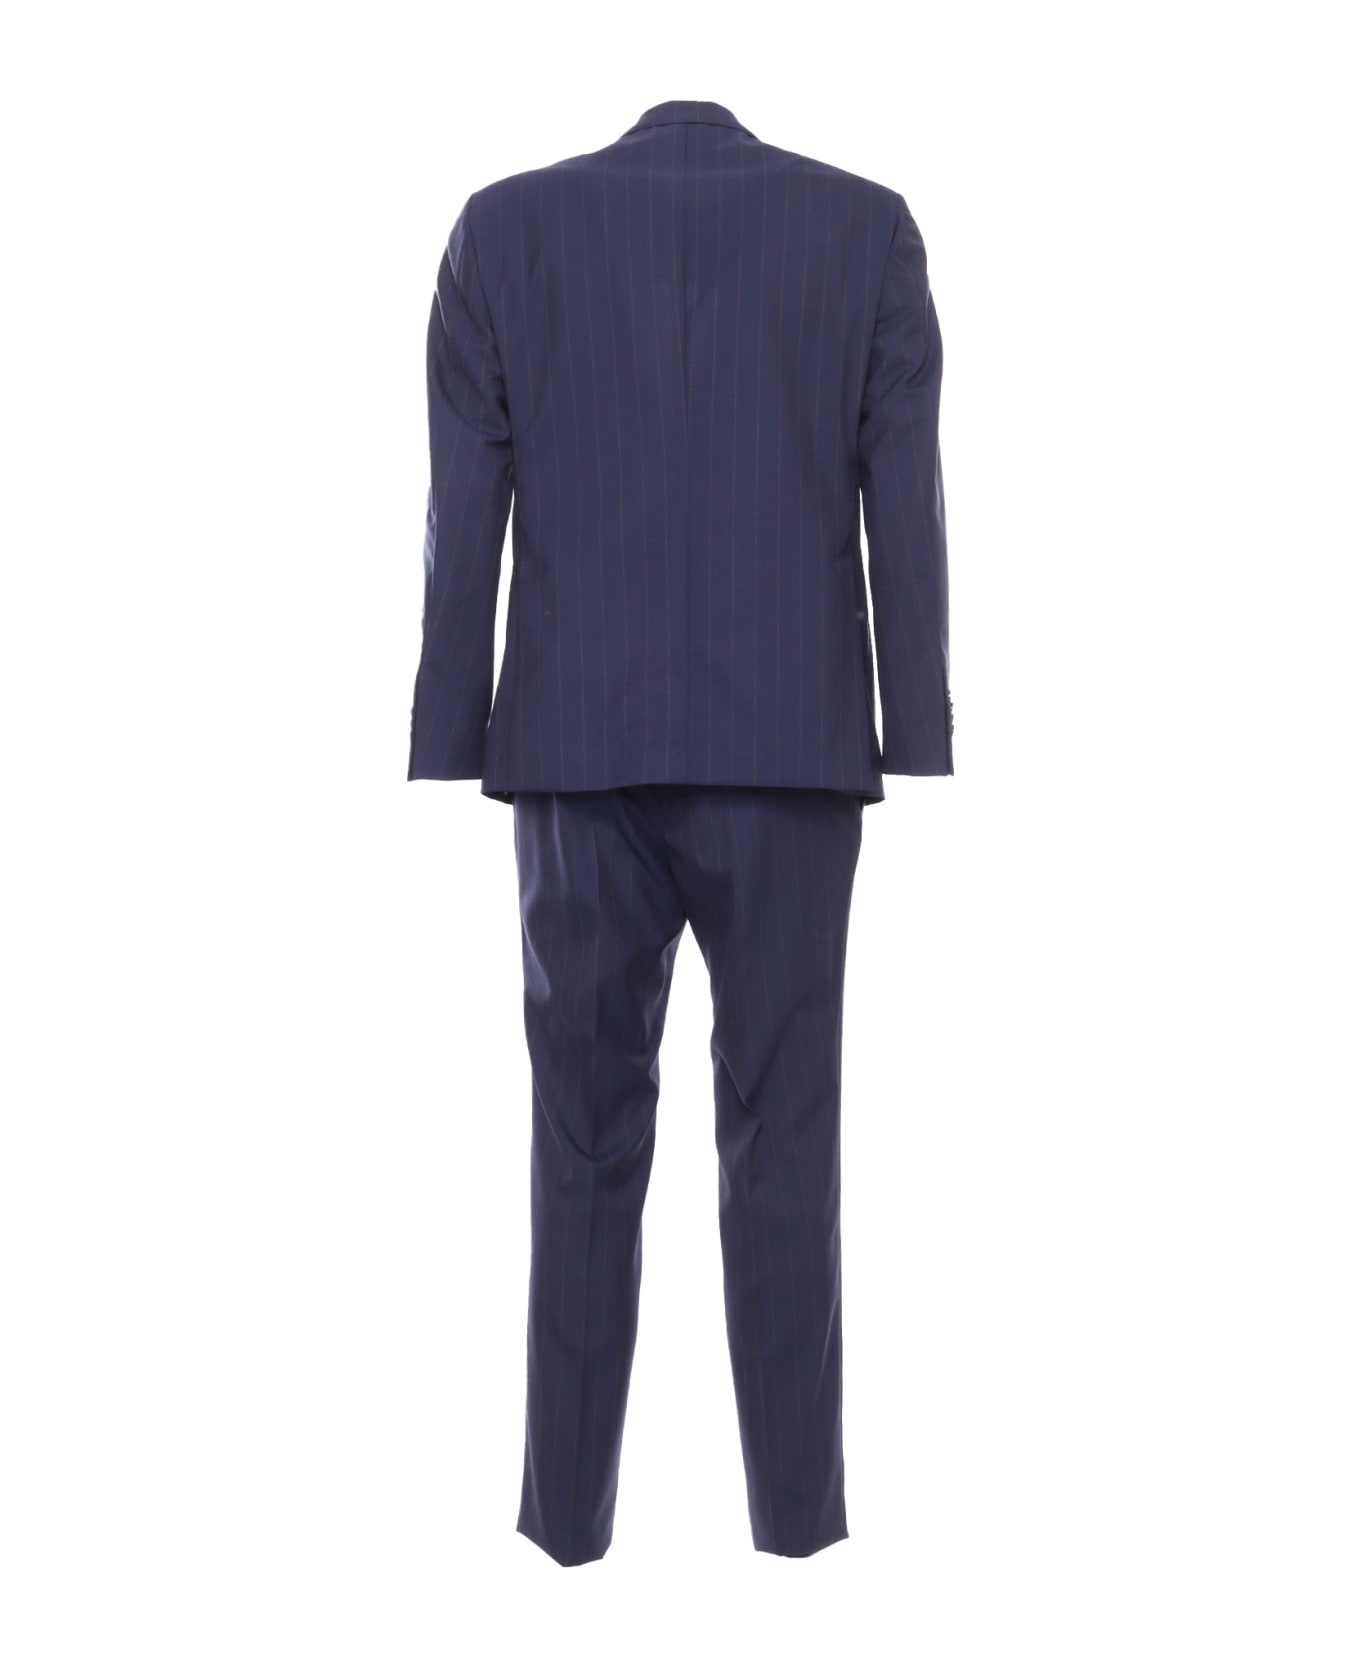 Luigi Bianchi Mantova Blue Pinstripe Suit - BLUE ボトムス